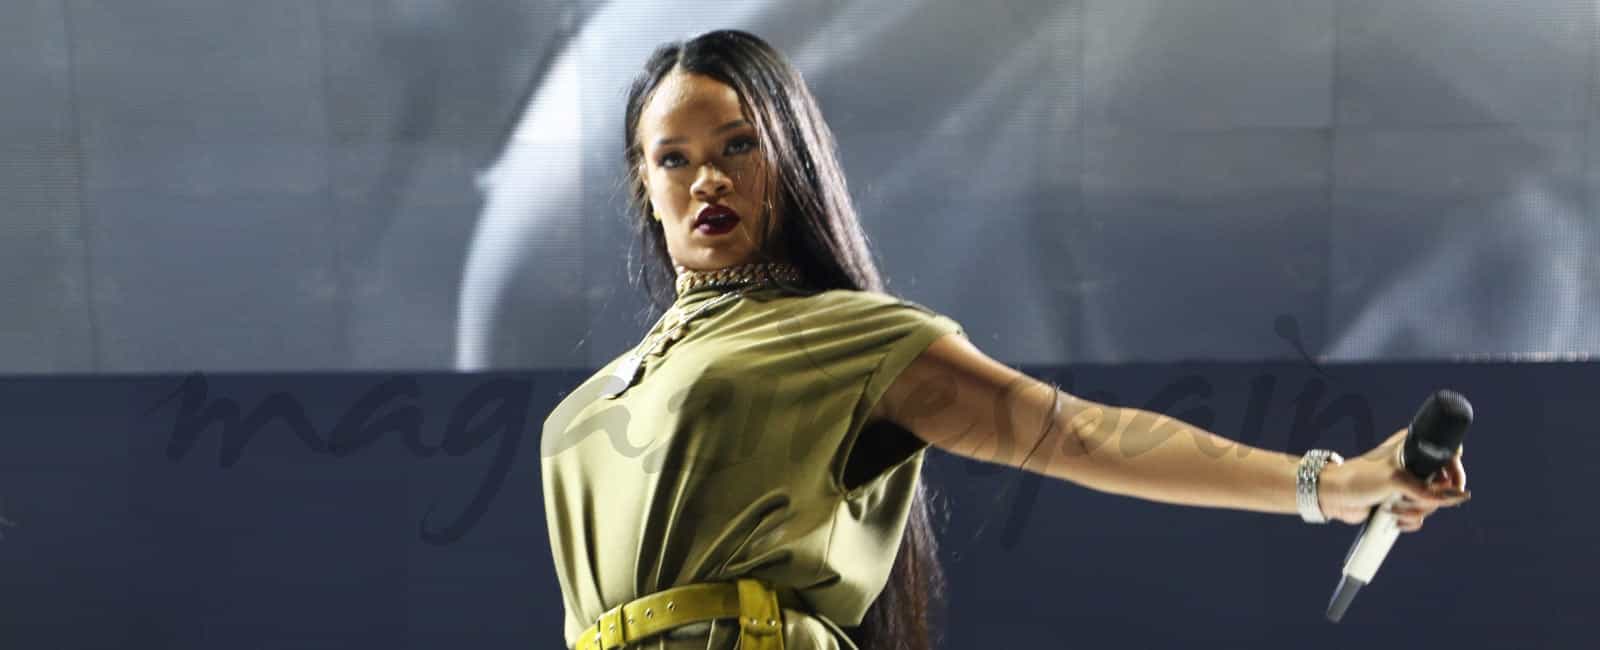 Rihanna, espectacular en el festival “Made in America”